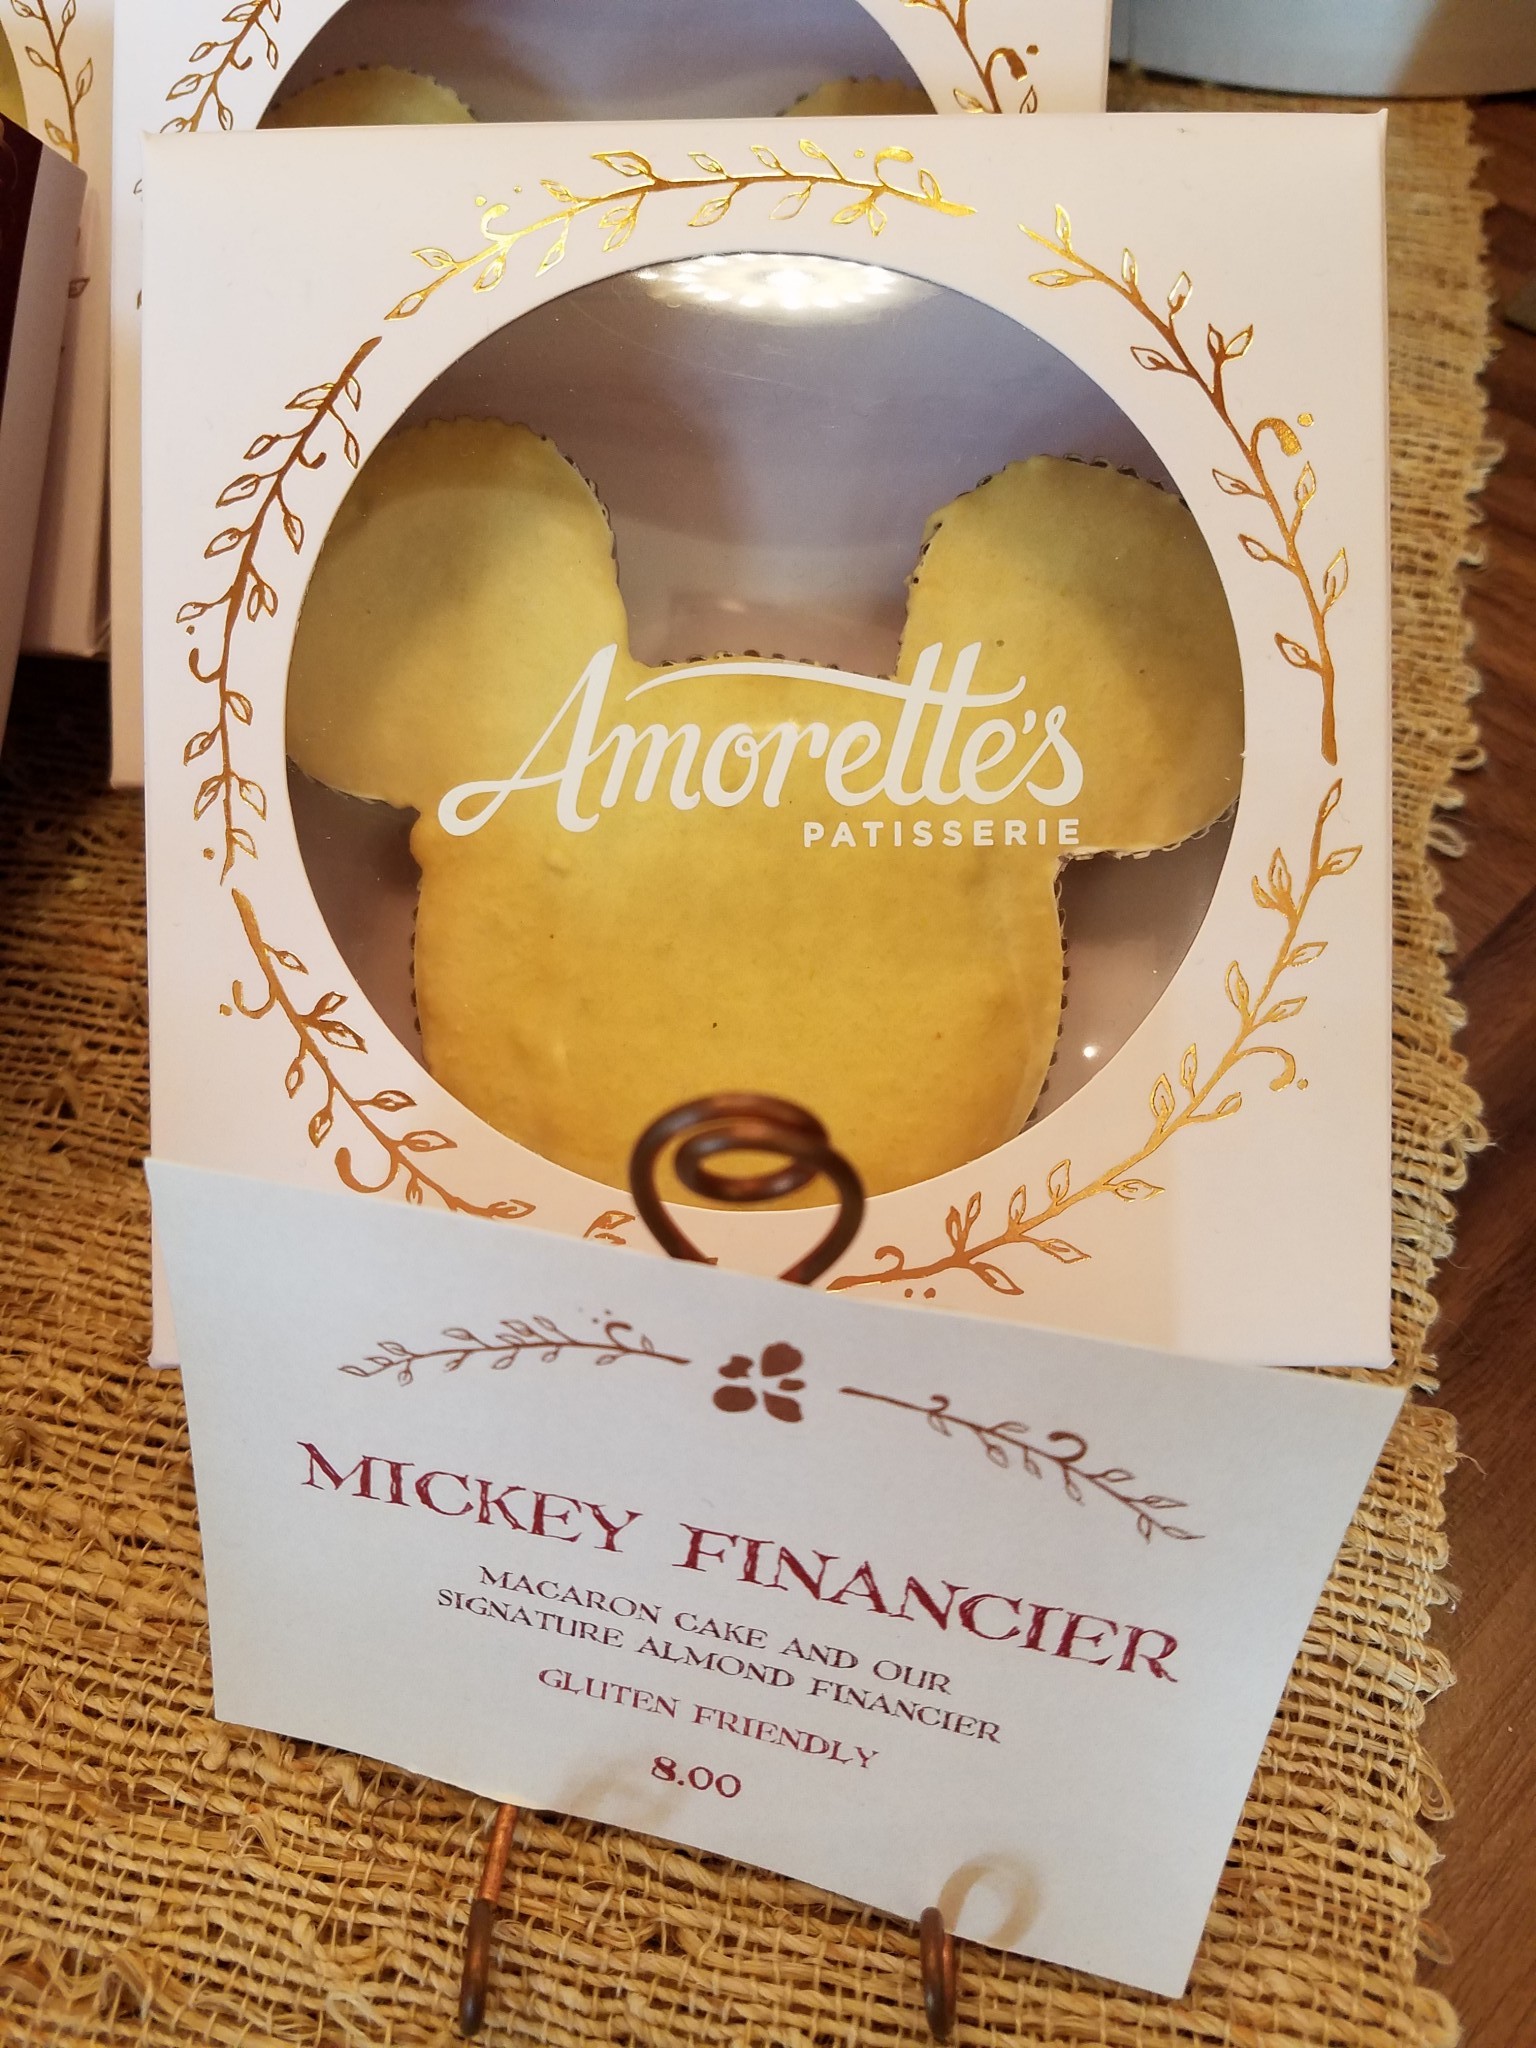 Enjoy Dessert and a Nightcap at Amorette’s Patisserie in Disney Springs